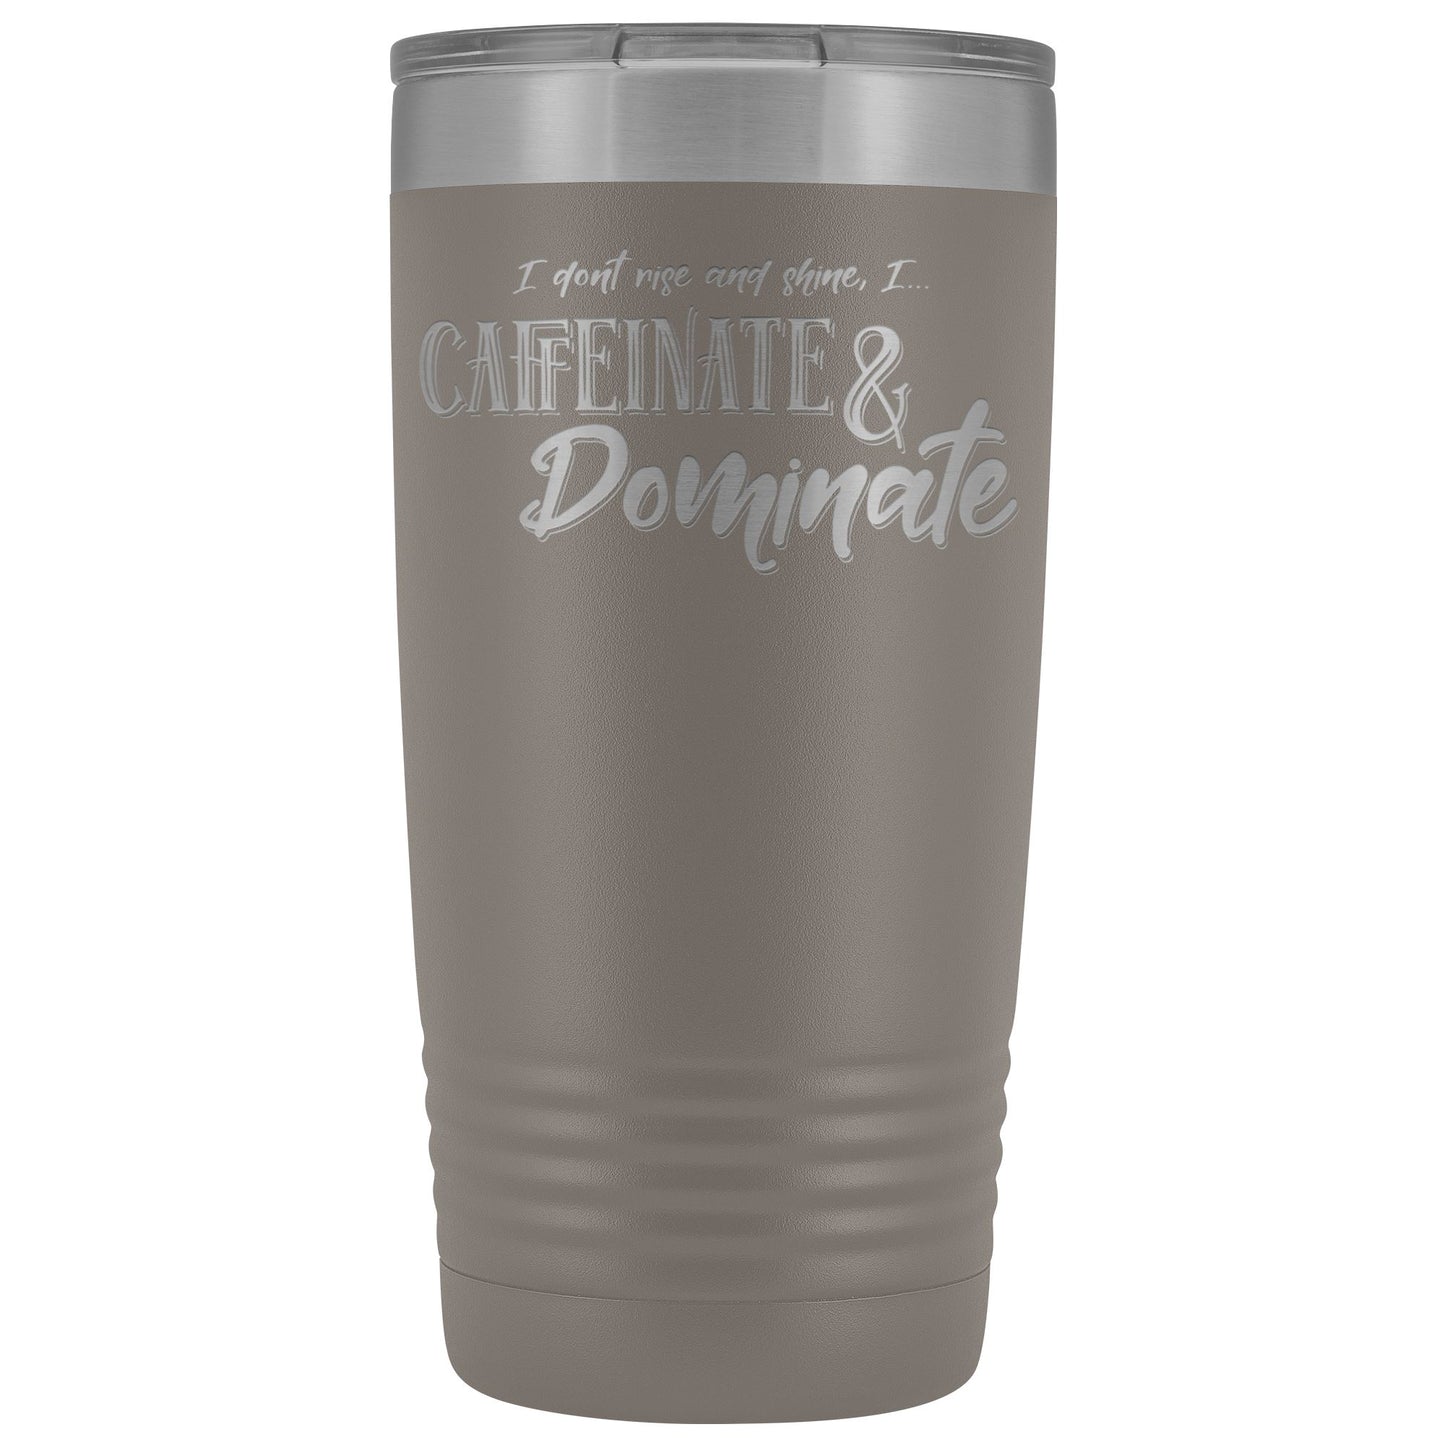 Caffeinate & Dominate 20oz. Insulated Coffee Tumbler